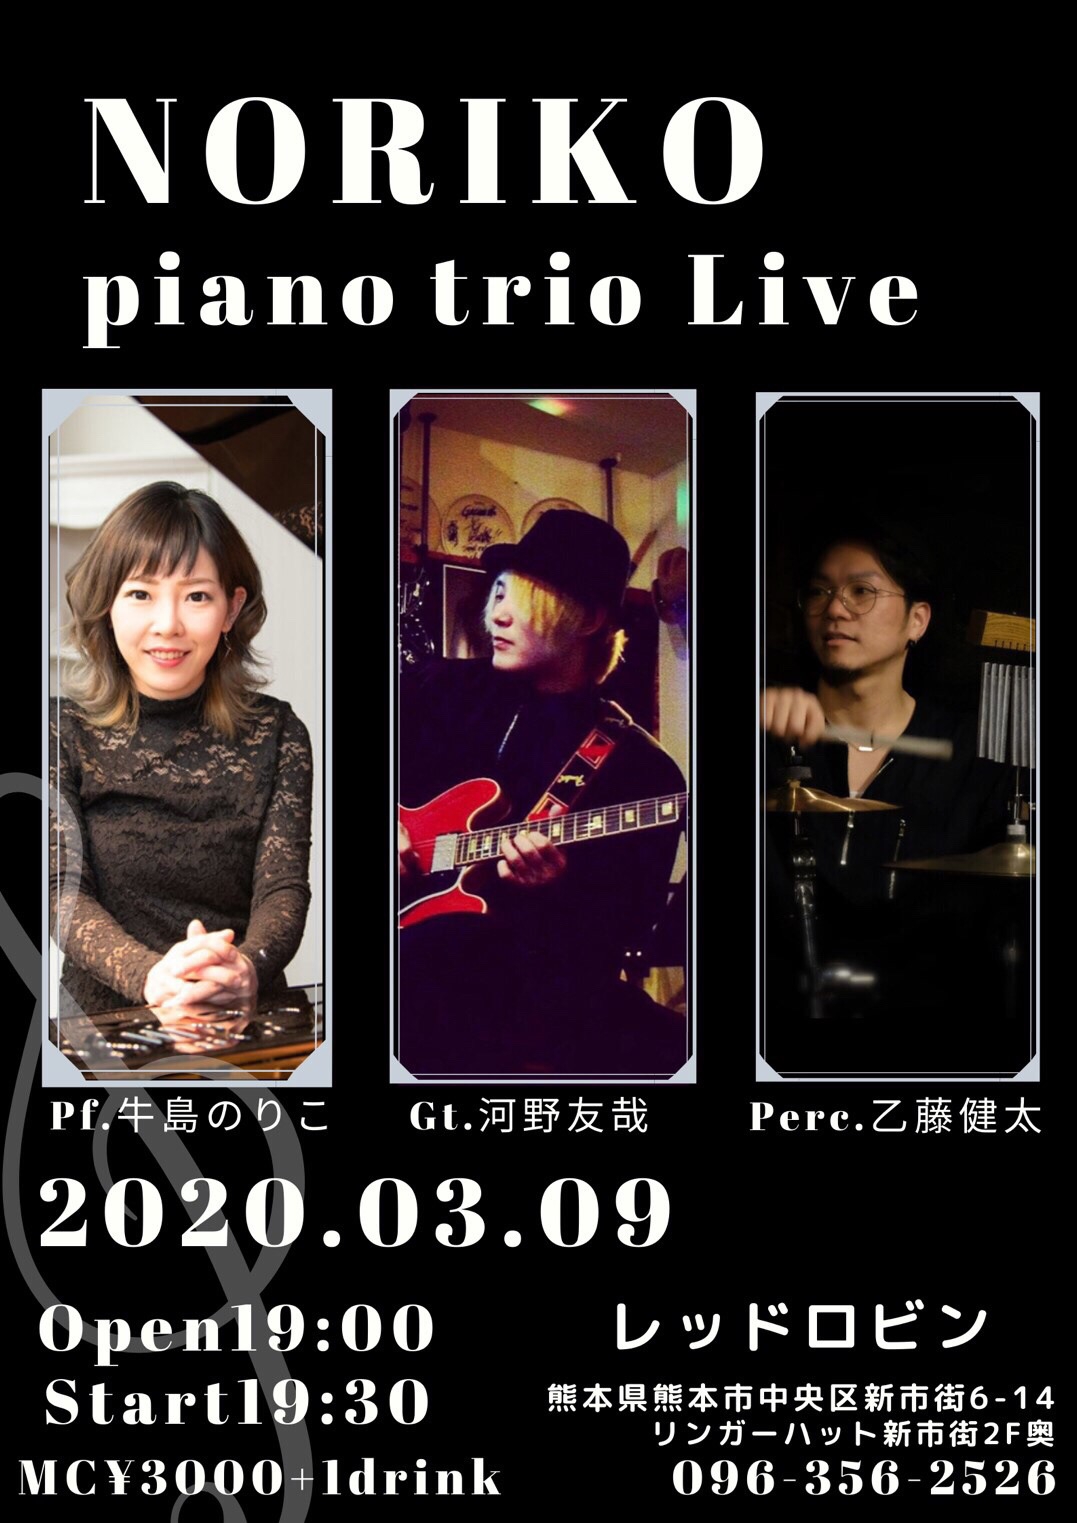 乙藤健太】2020/3/9 NORIKO piano trio Live | Cee